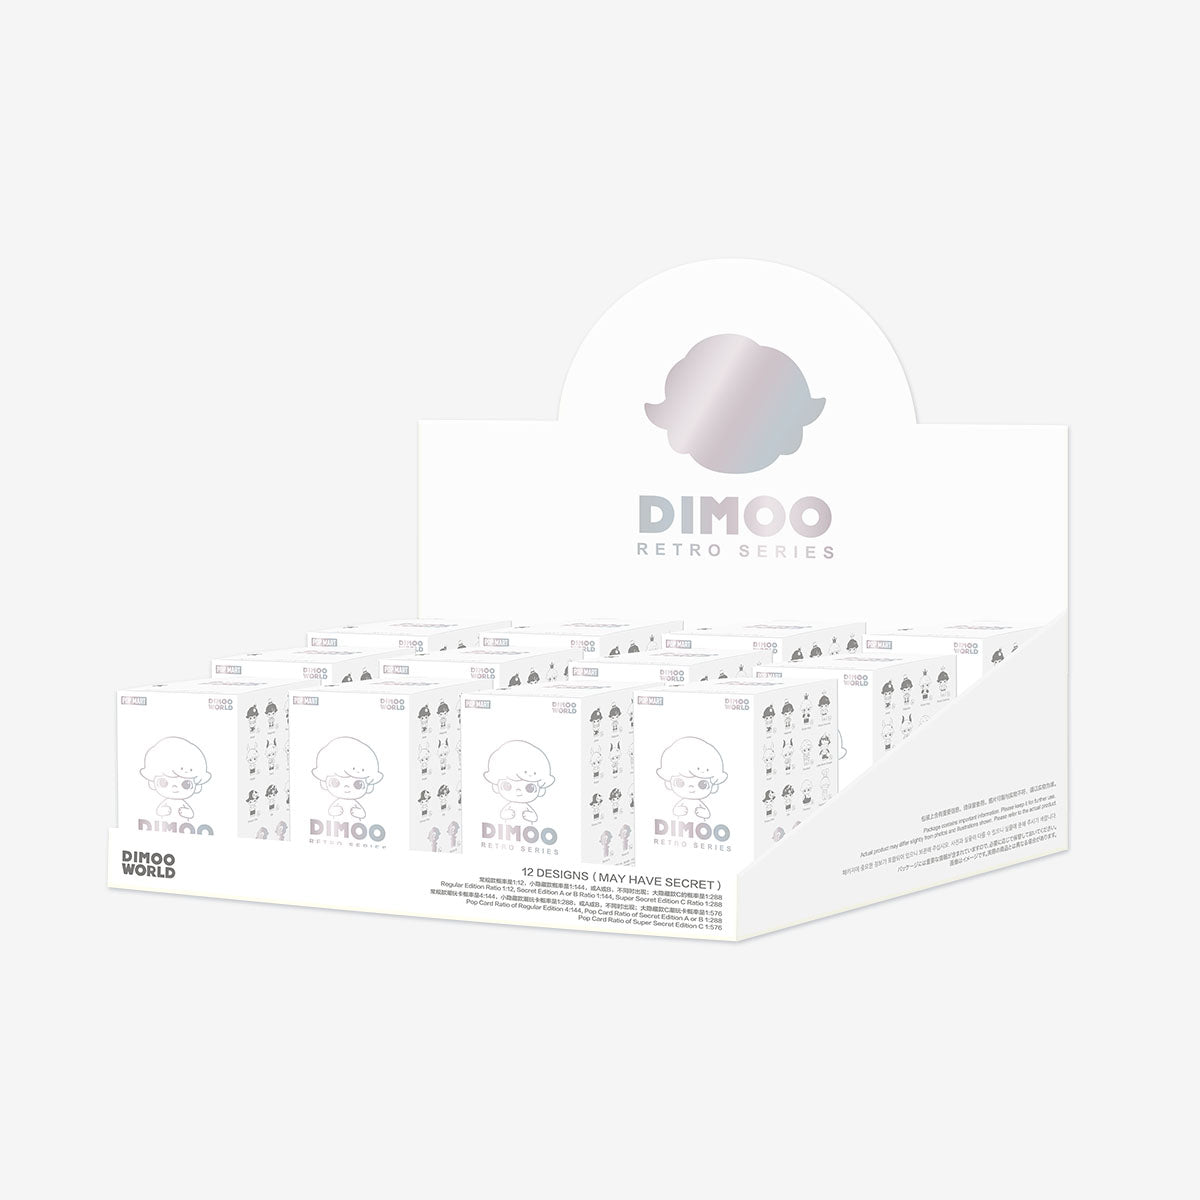 DIMOO Retro Series PVC Doll Confirmed Box